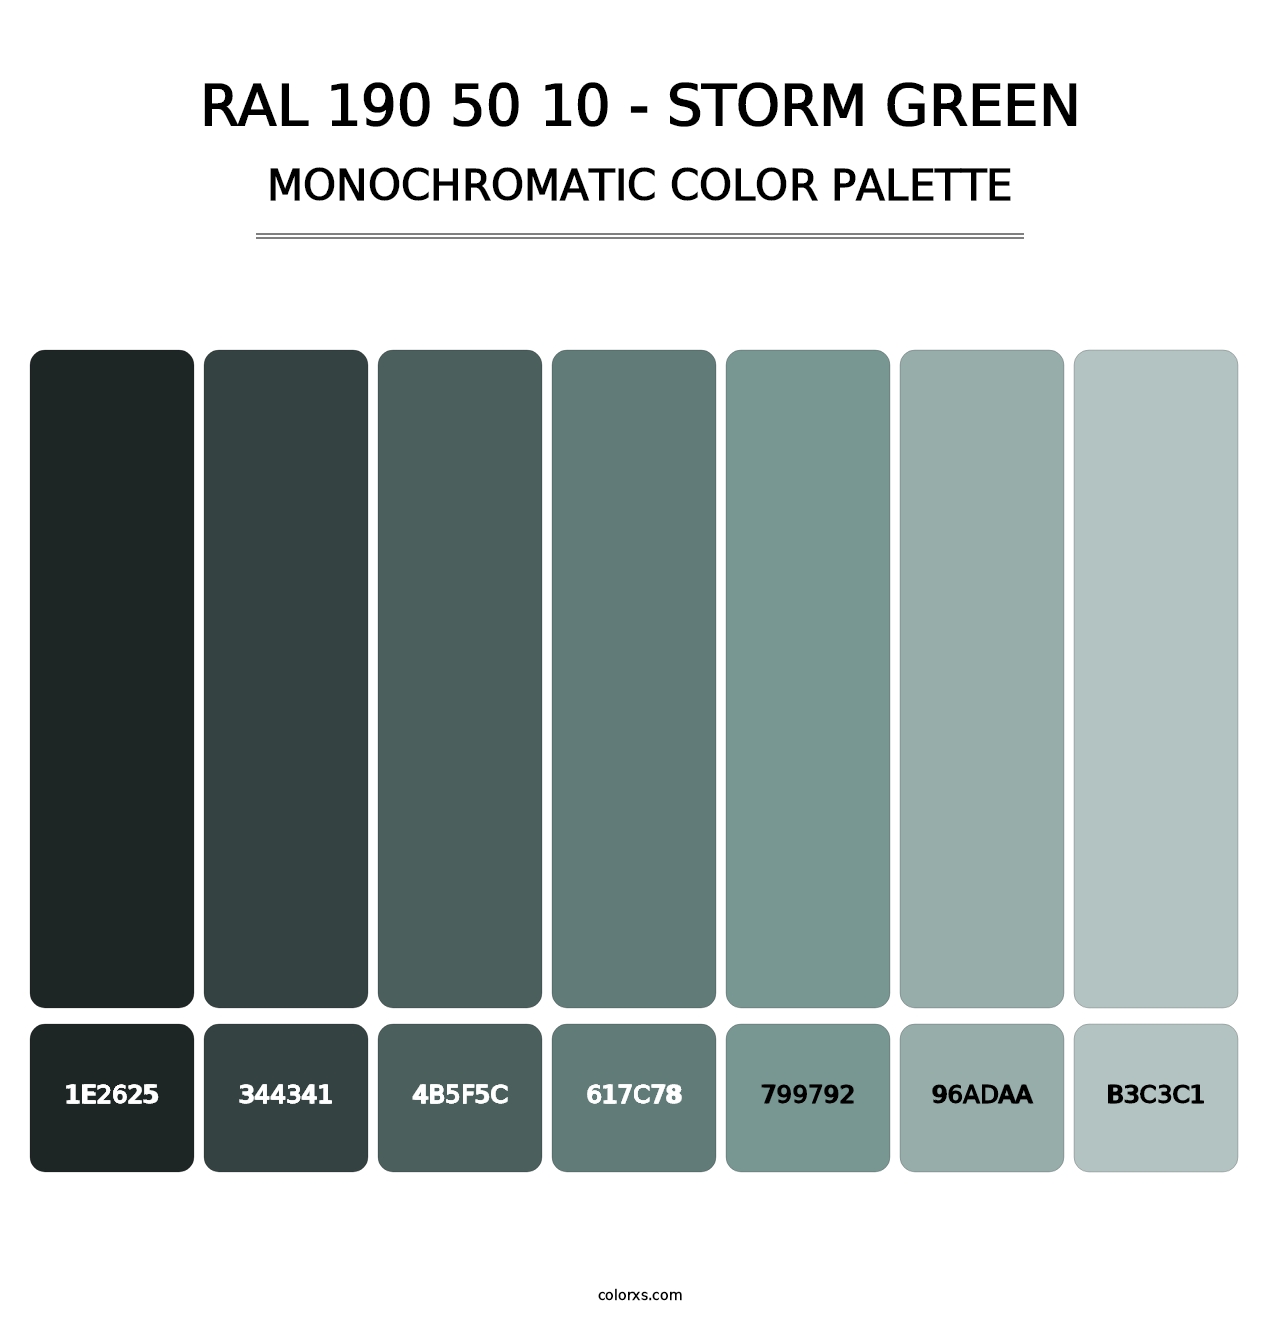 RAL 190 50 10 - Storm Green - Monochromatic Color Palette